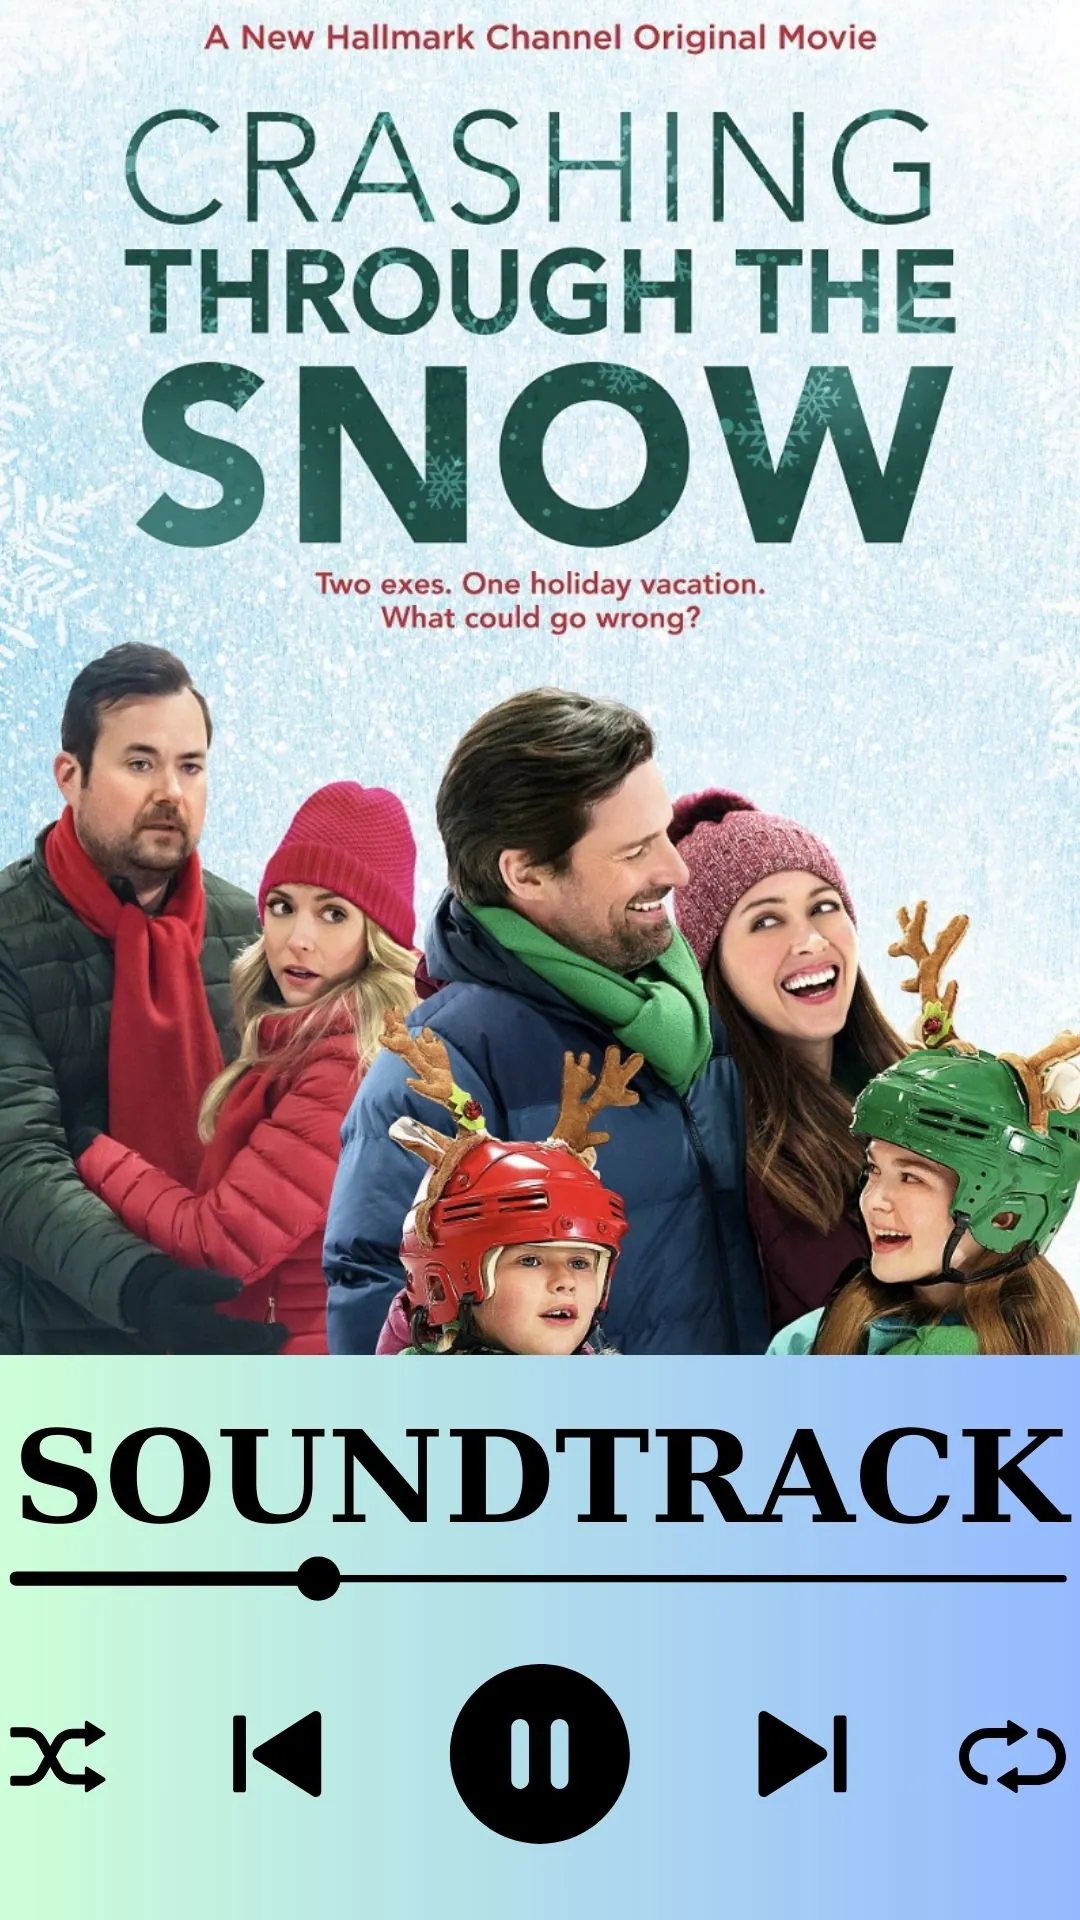 Crashing Through The Snow Soundtrack